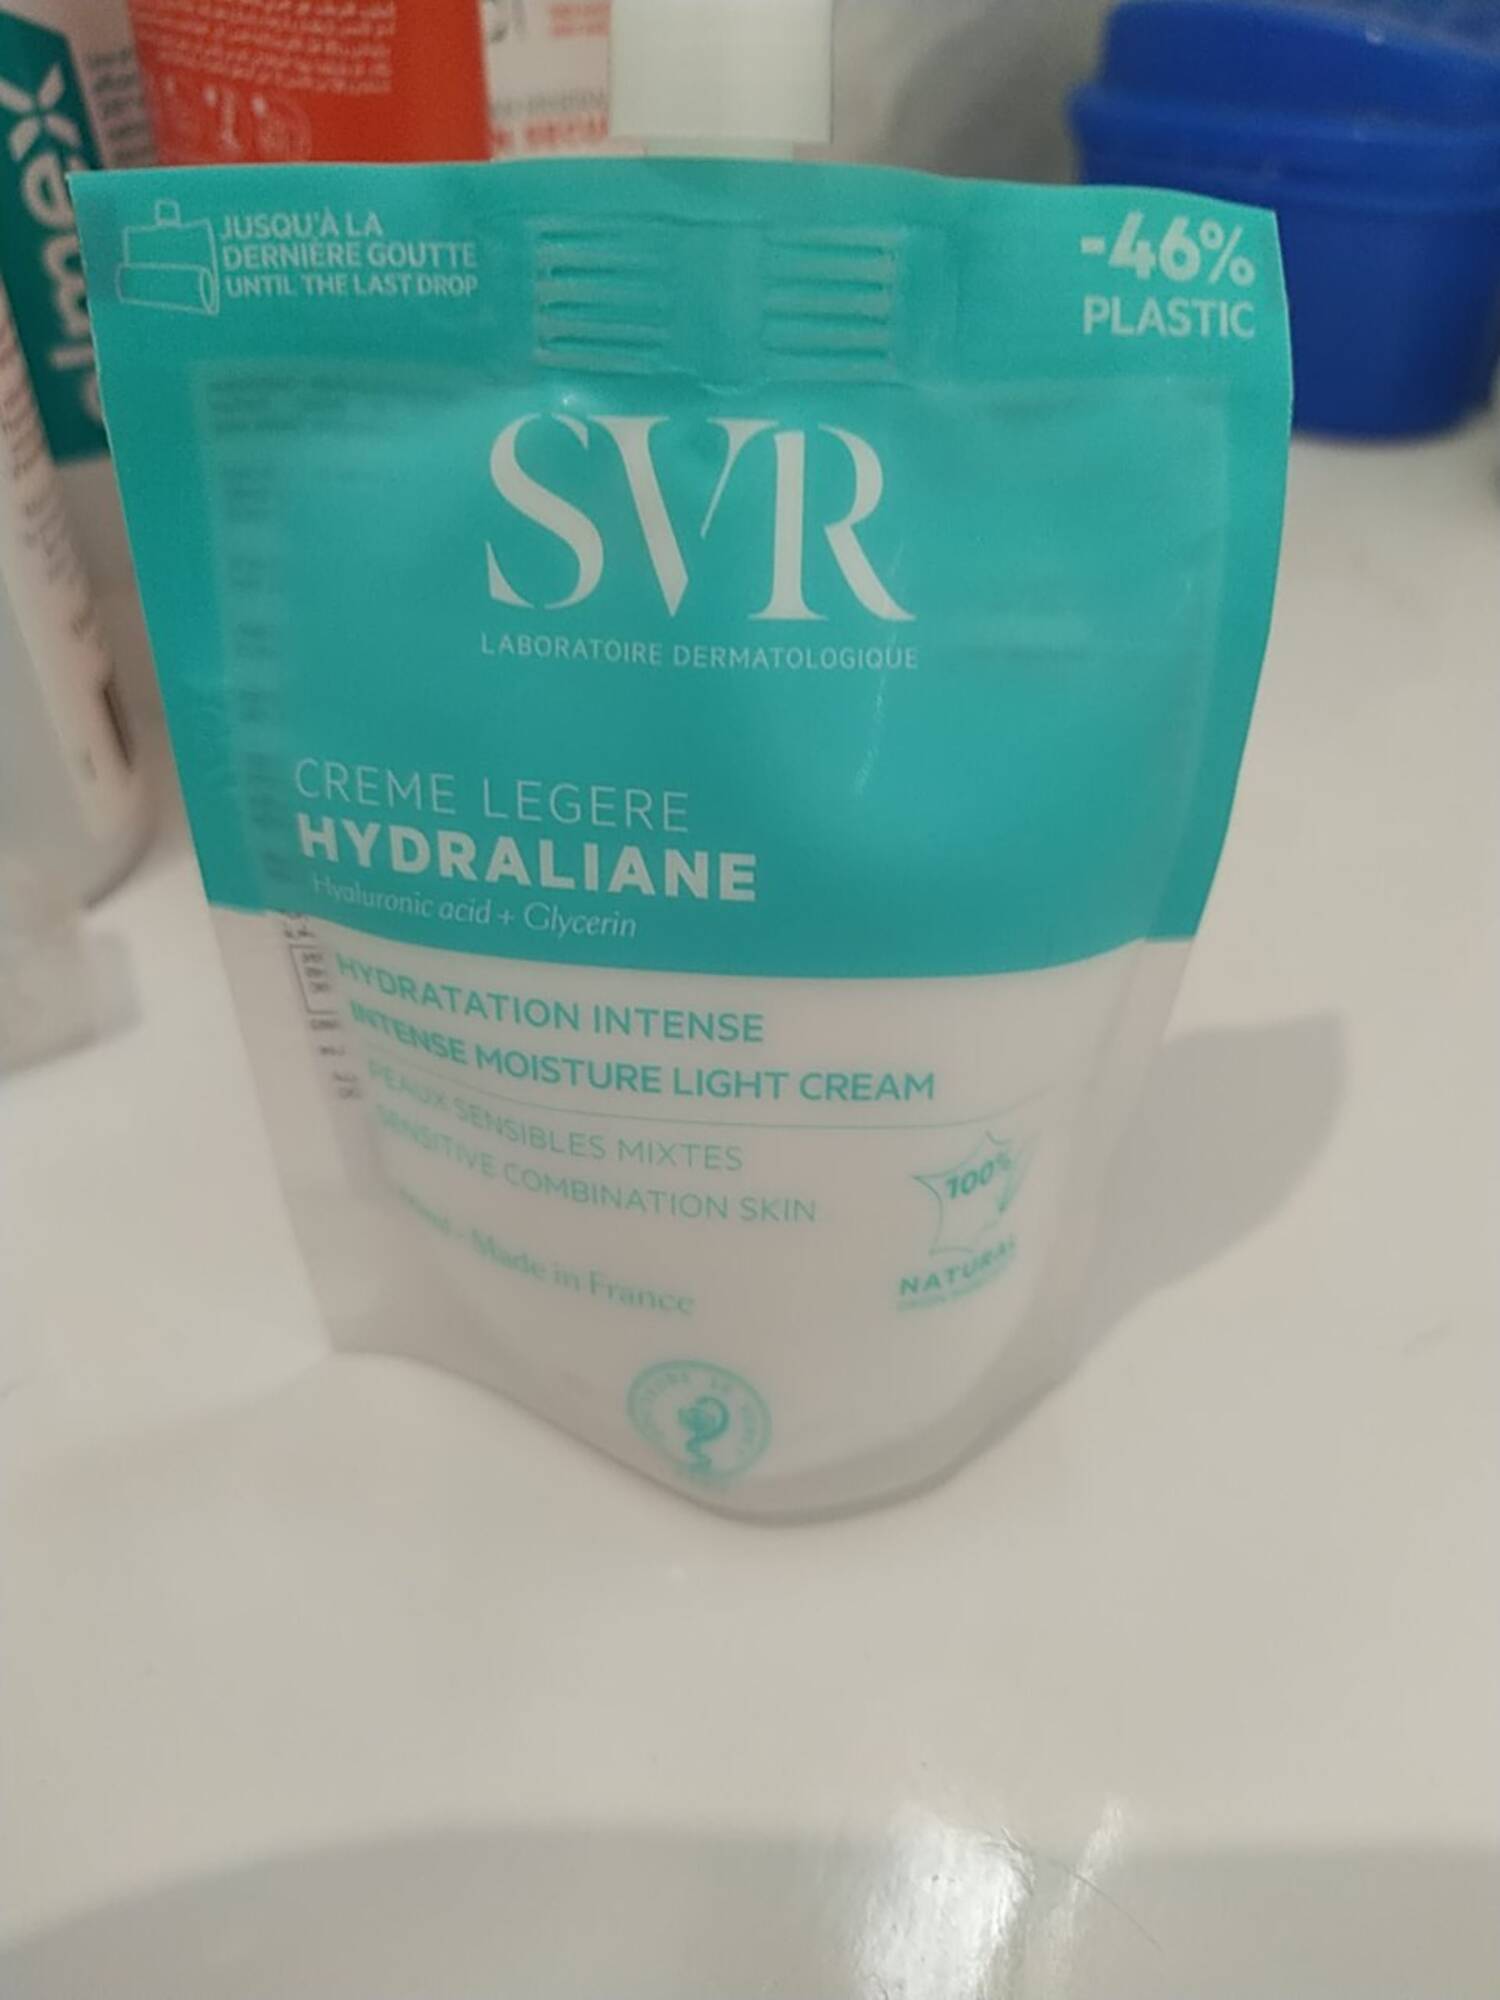 SVR - Crème légère hydraliane